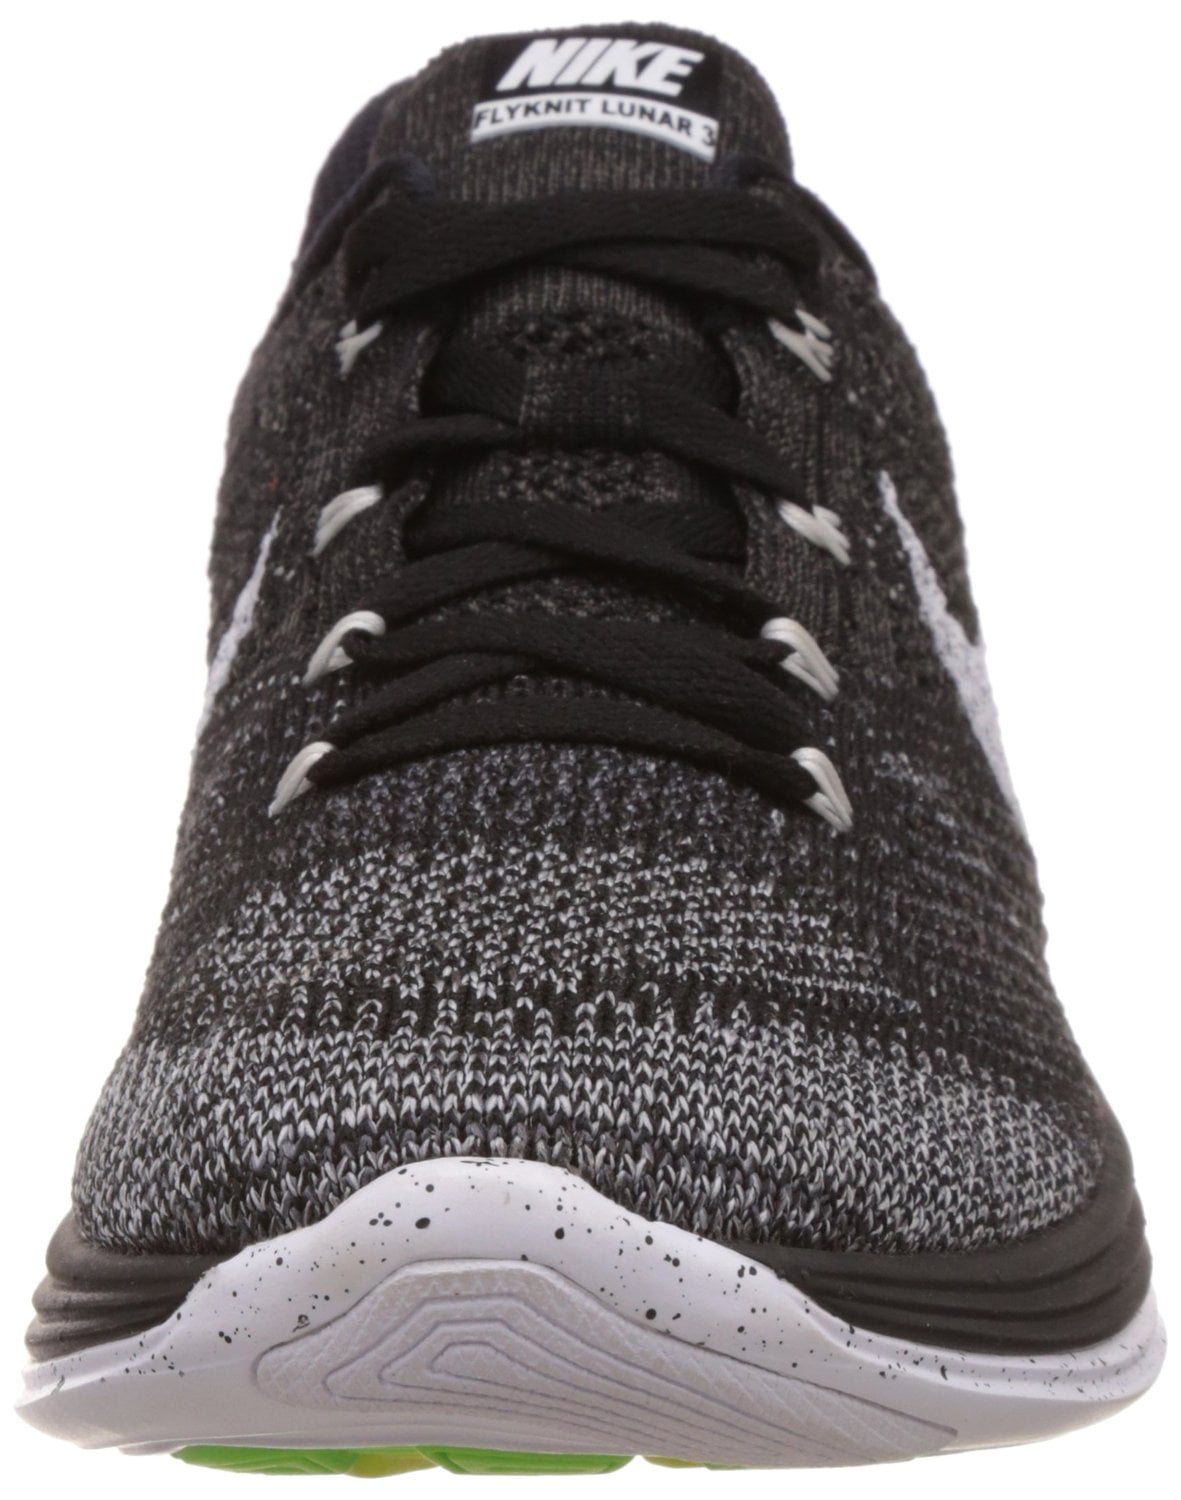 Nike Men's Flyknit Lunar3 Shoe-Black/White - Walmart.com